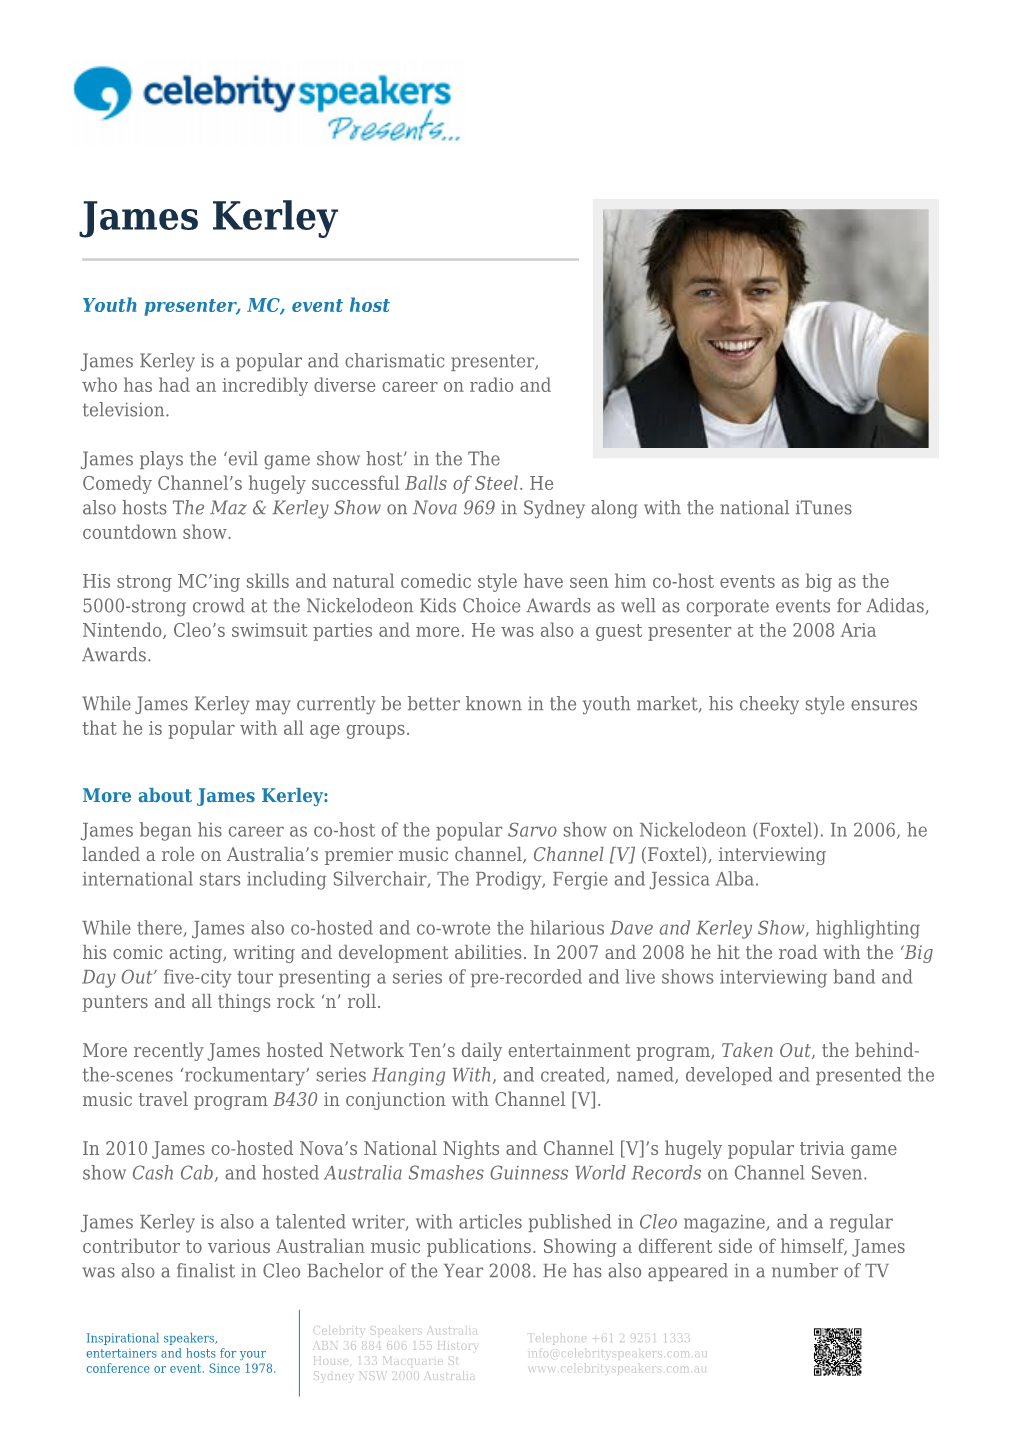 James Kerley